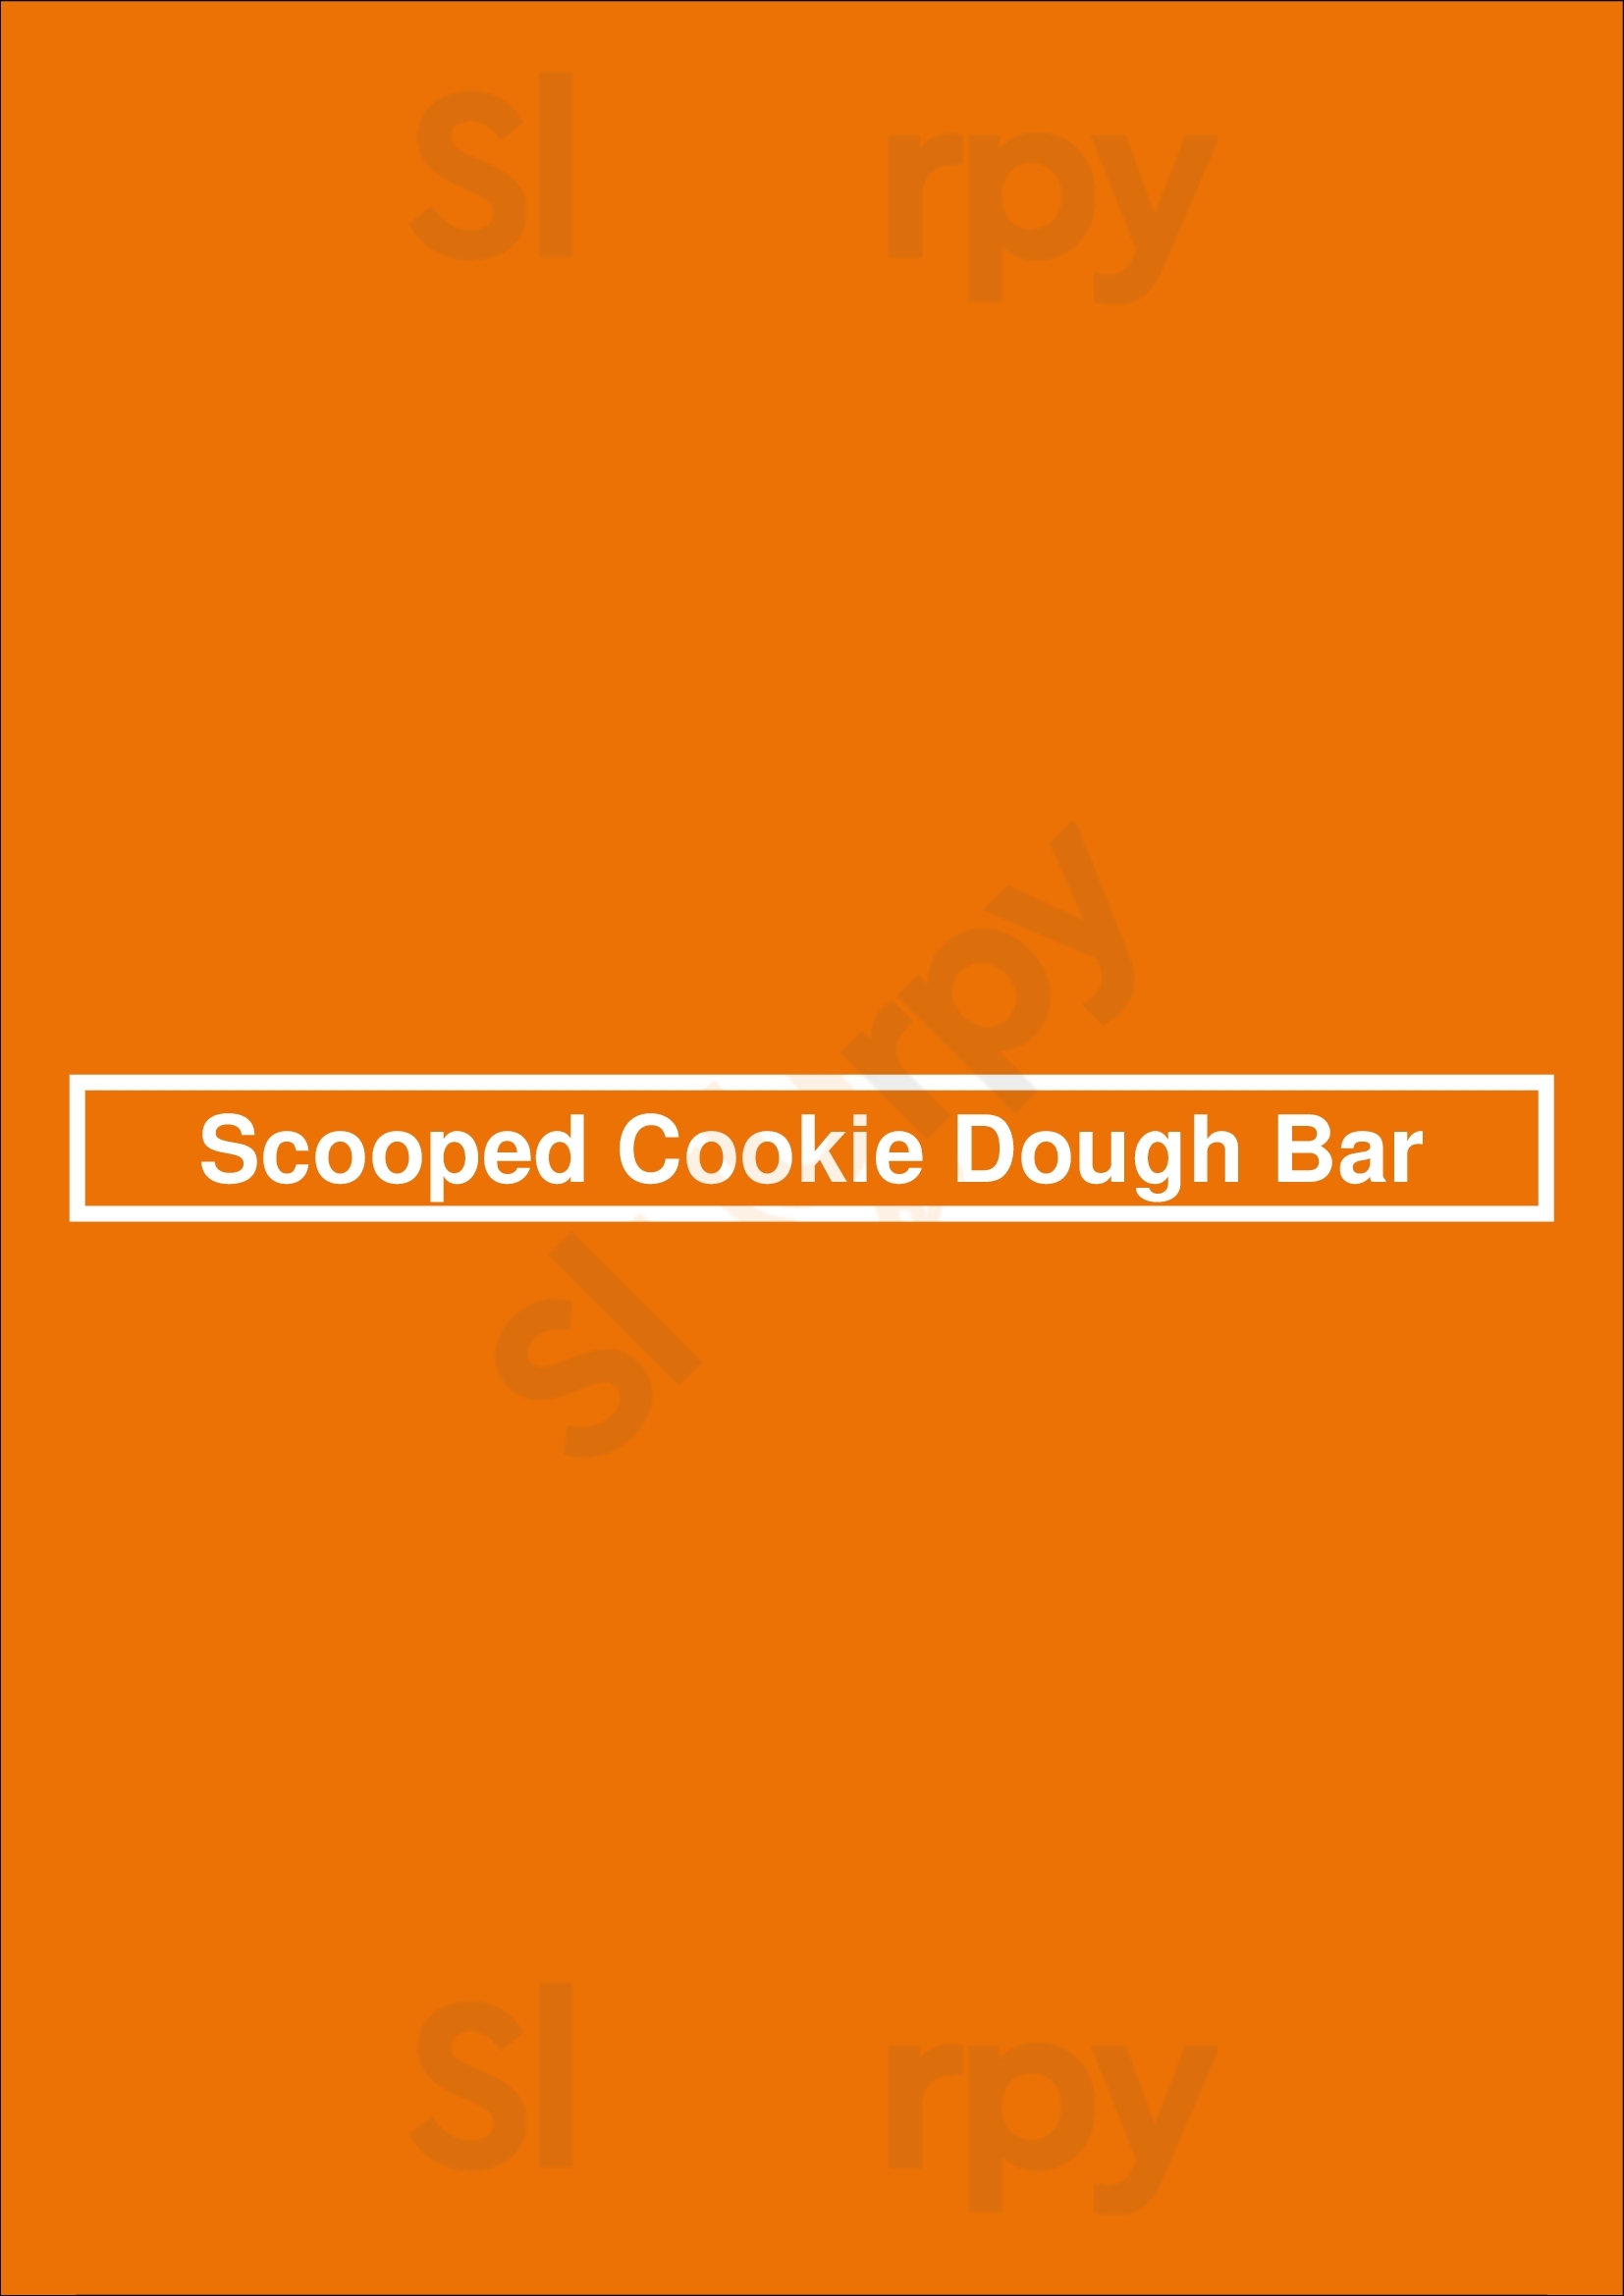 Scooped Cookie Dough Bar Chicago Menu - 1